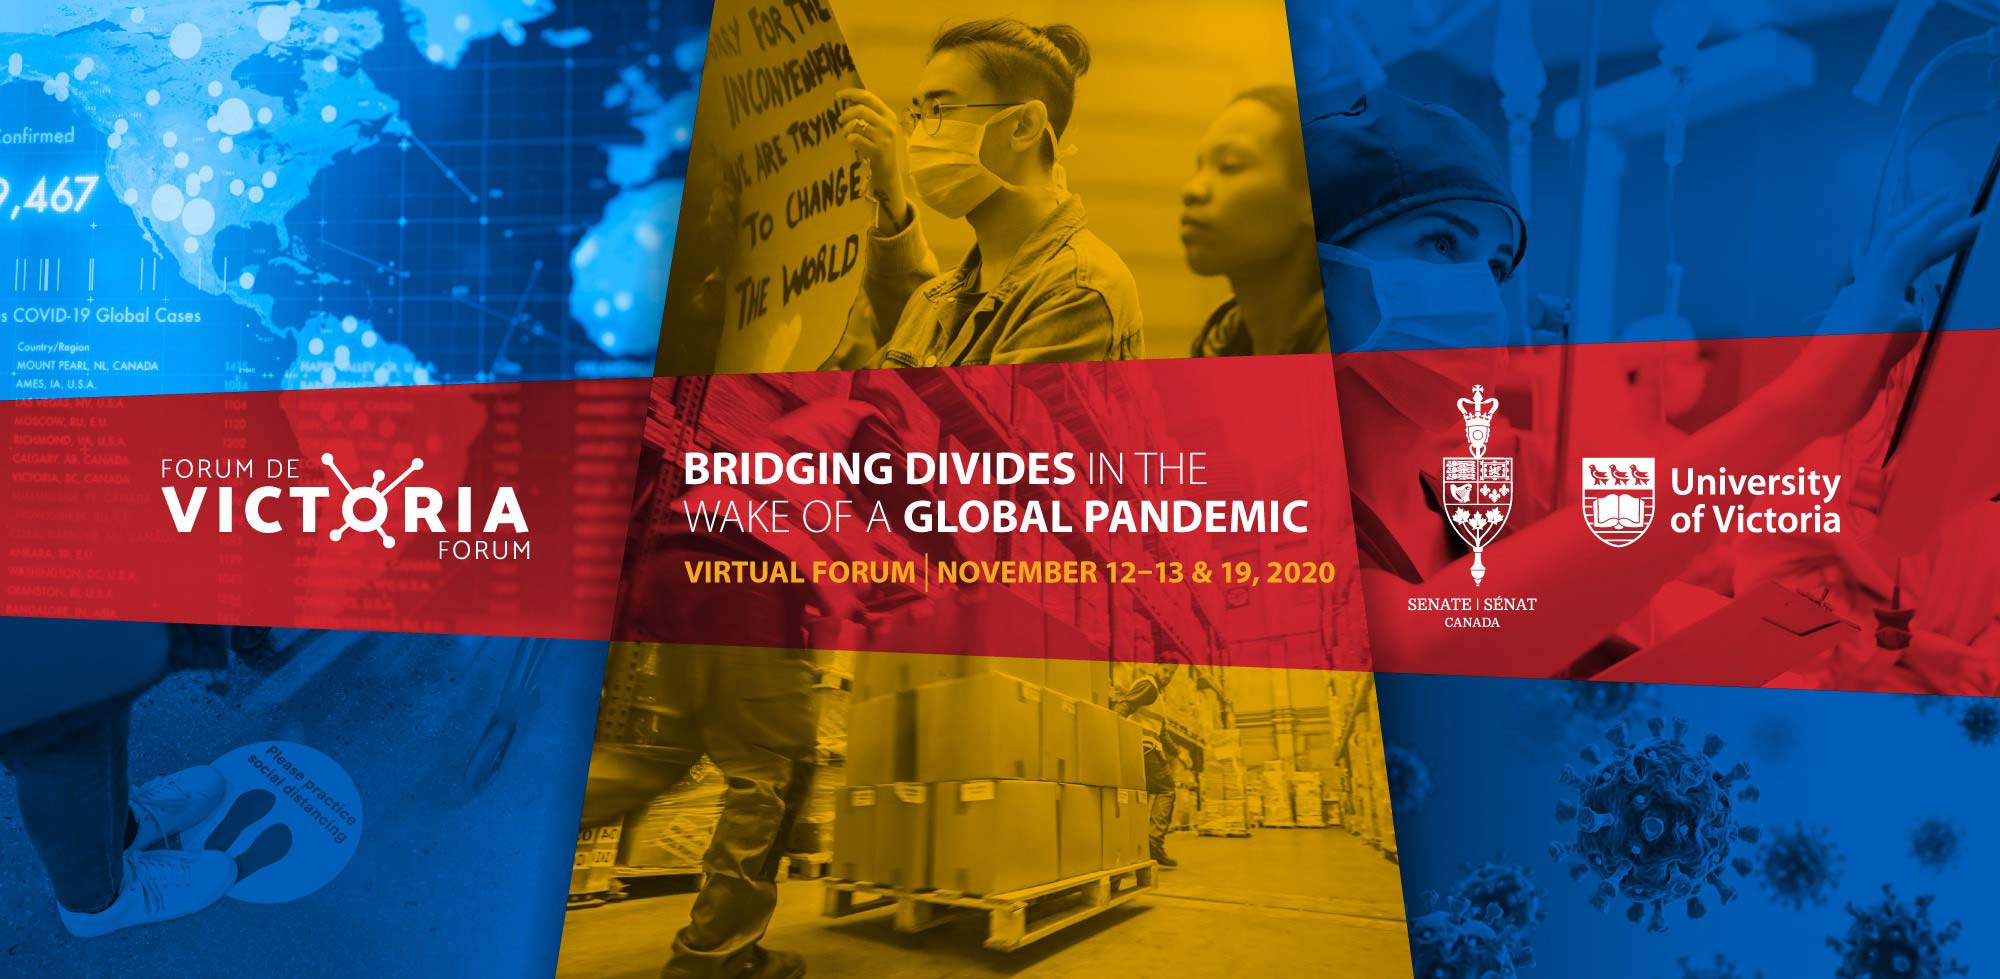 Bridging divides and building forward: 2020 Victoria Forum asks the big questions